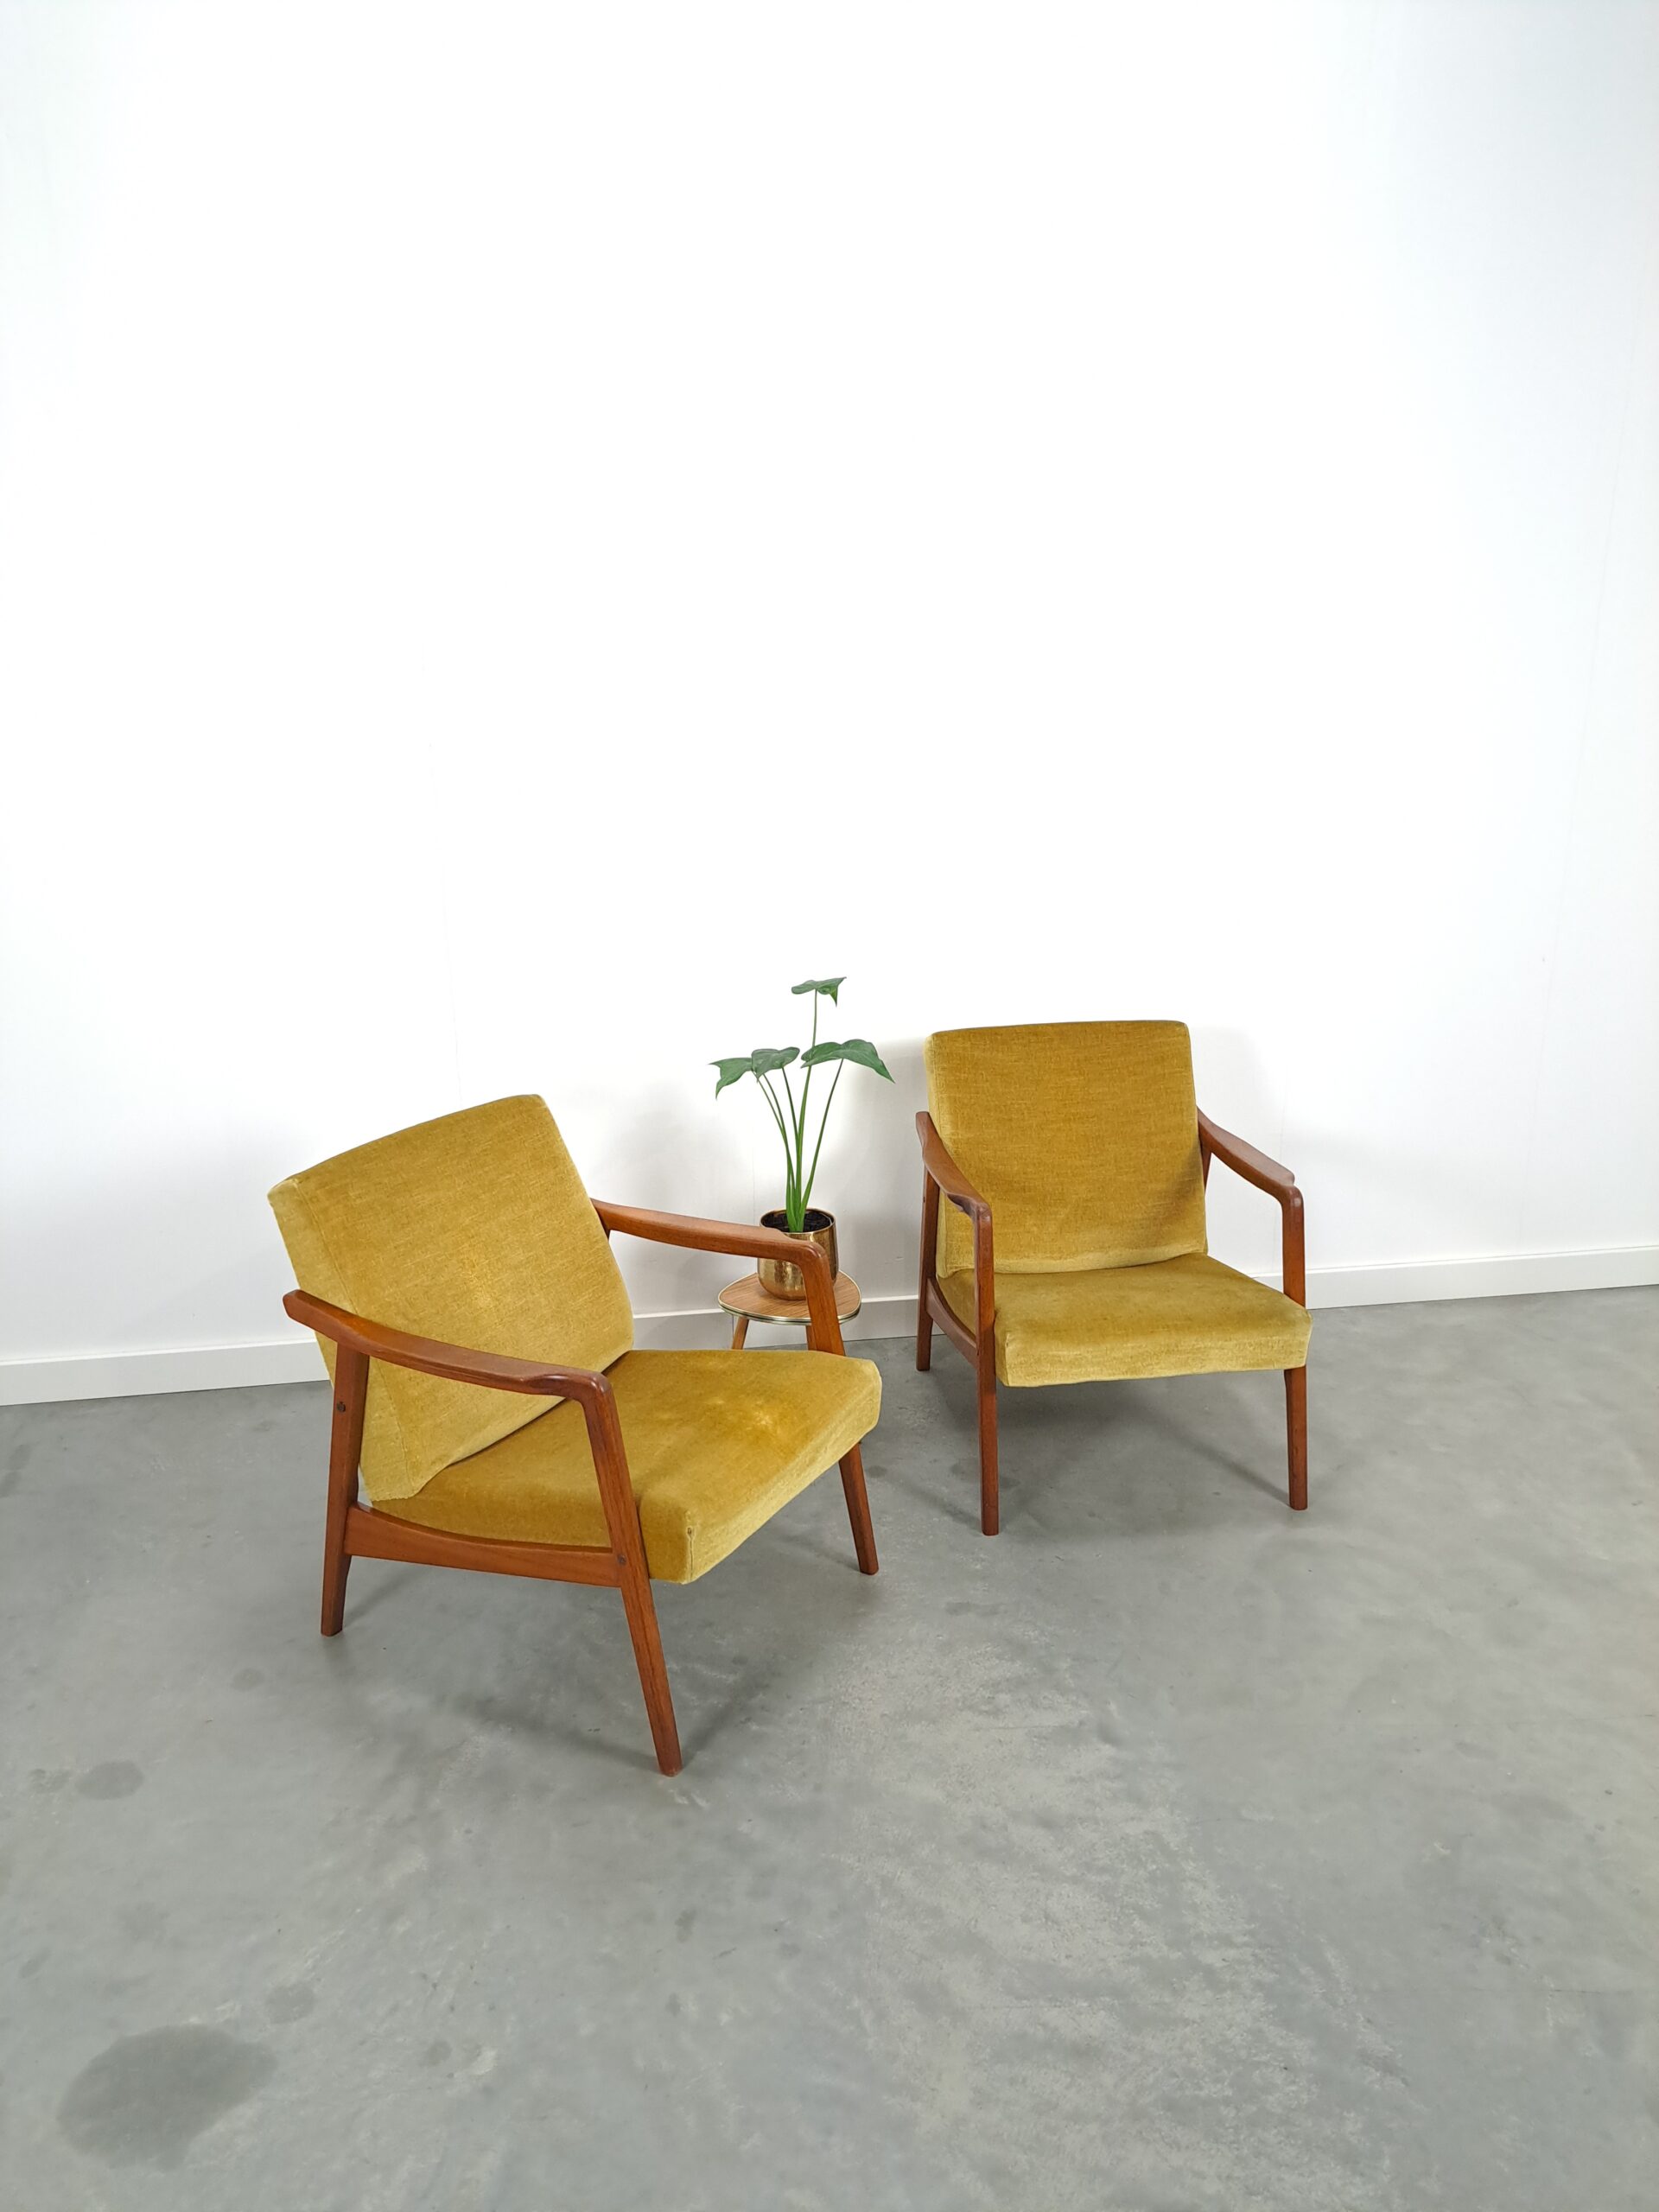 Vintage fauteuils met teakhouten frame en groen gele bekleding